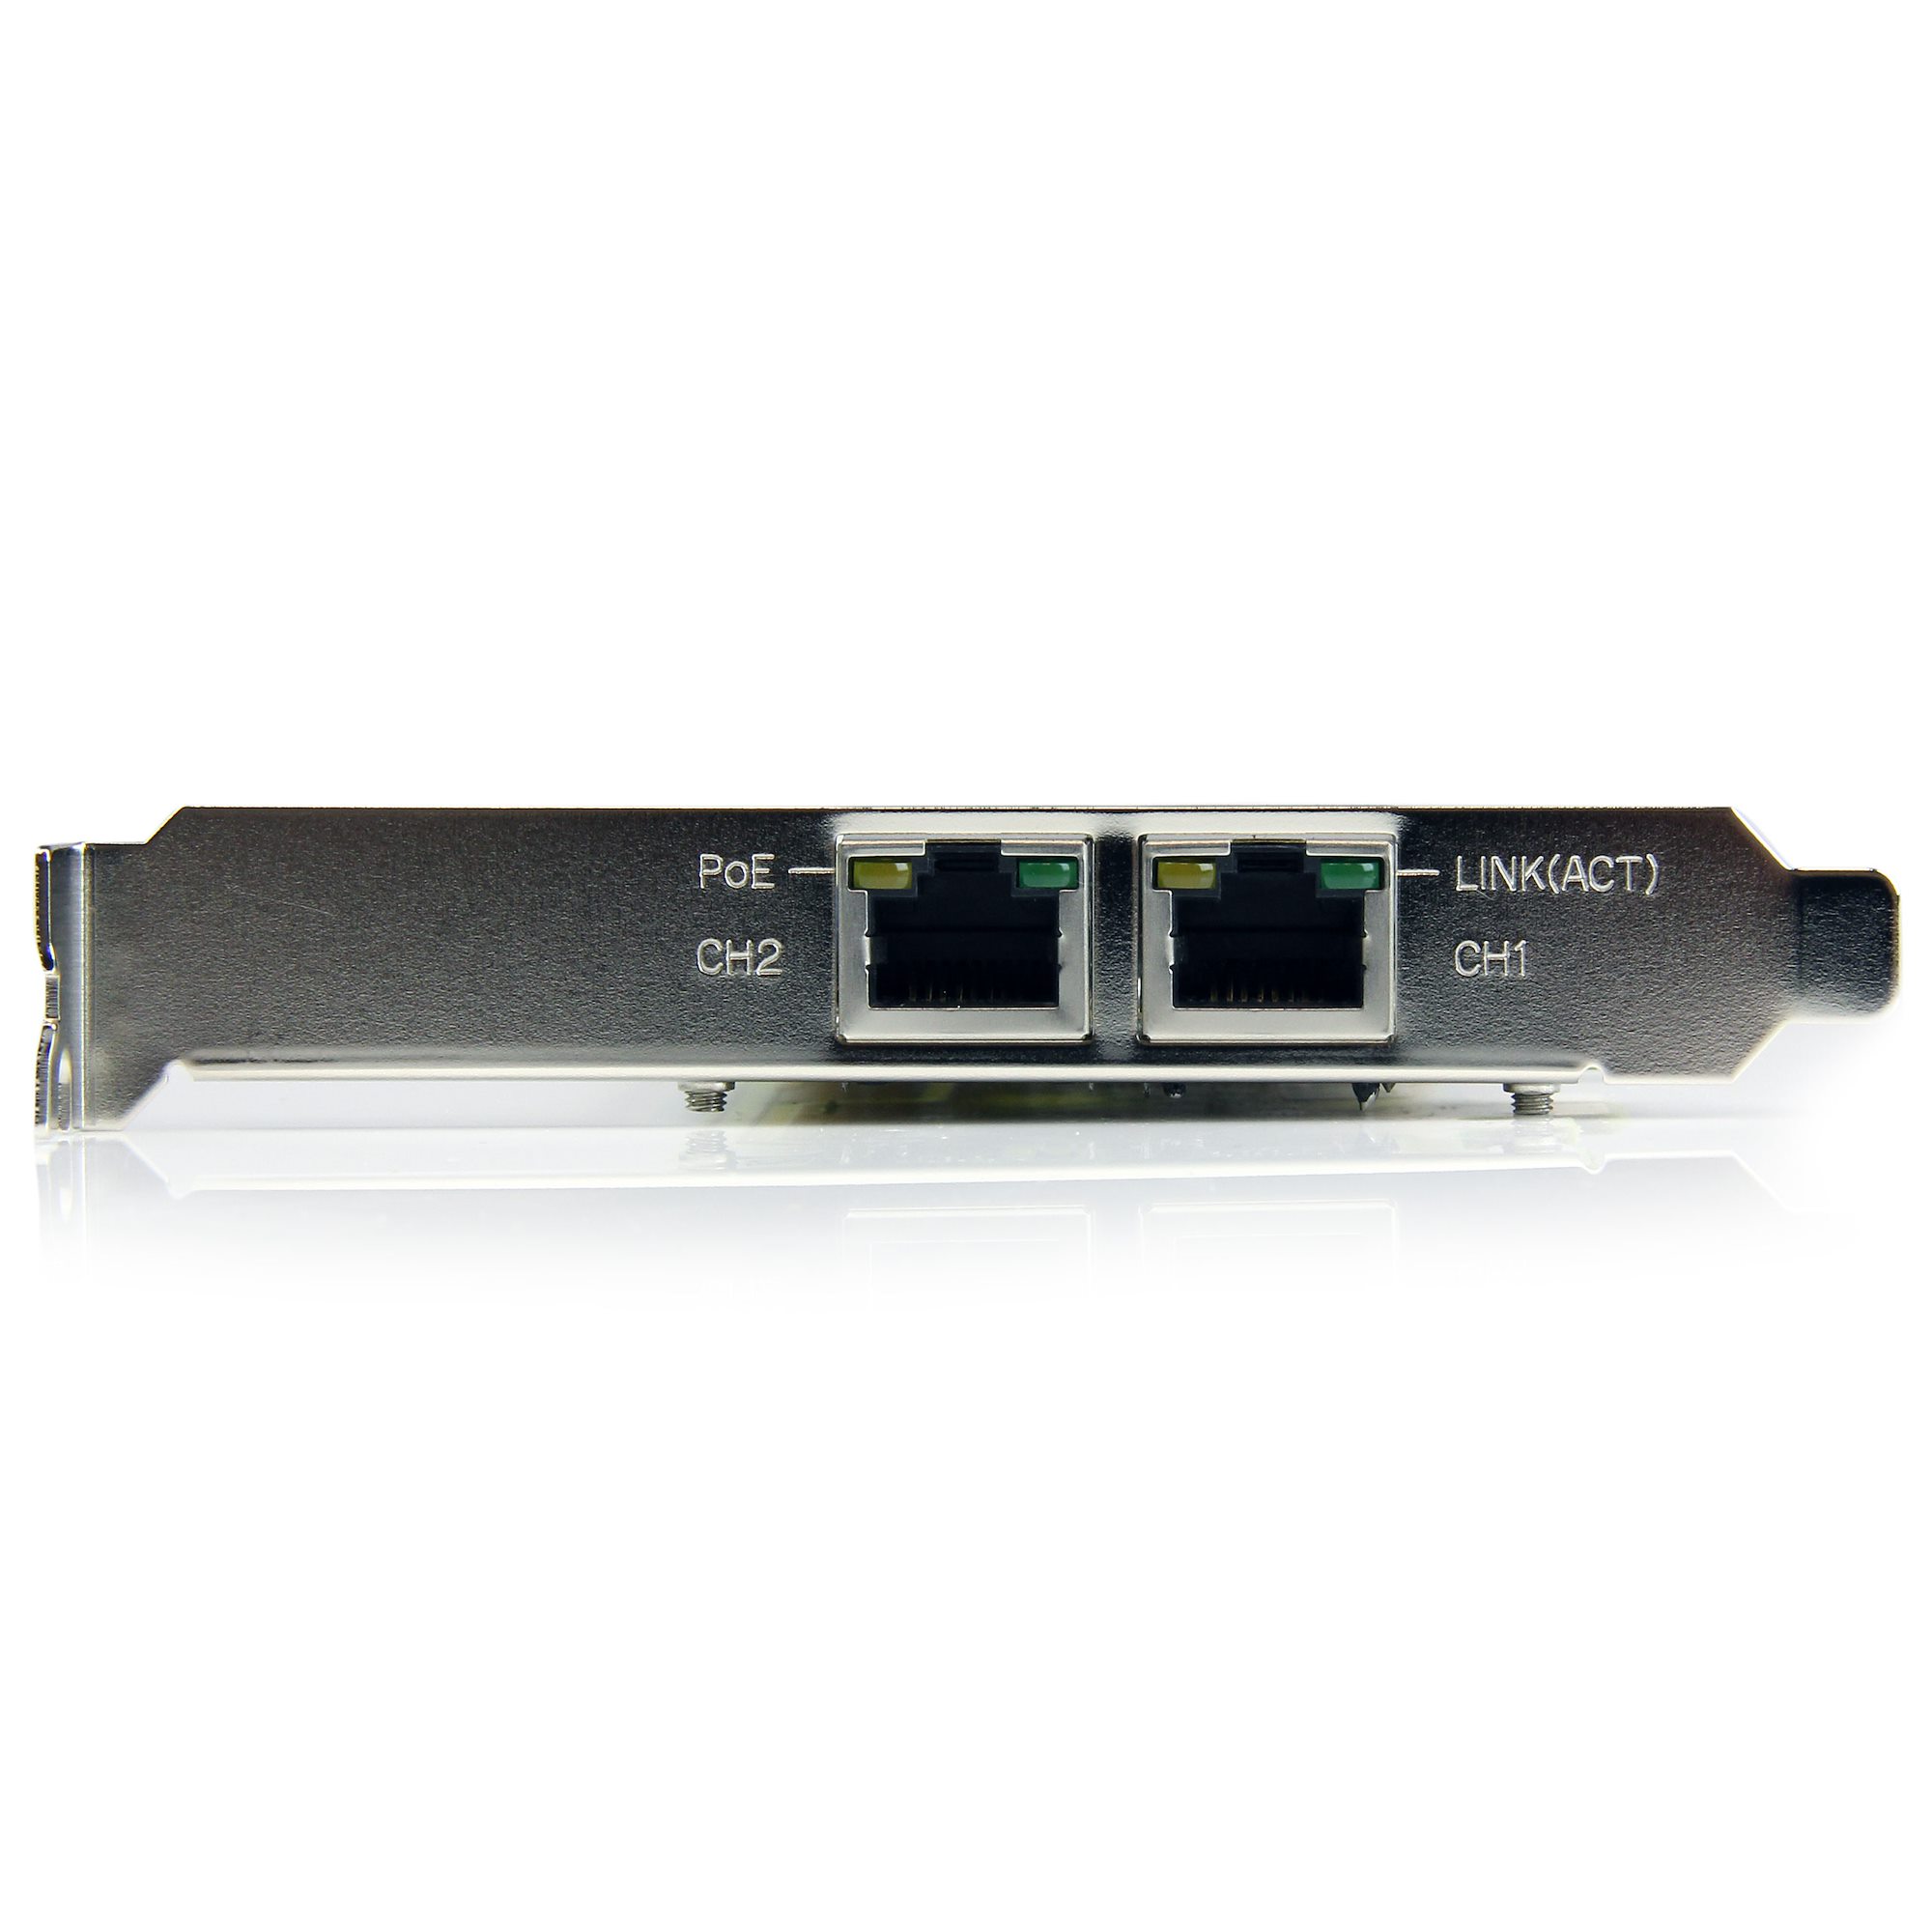 Dual Port PCI Express Gigabit Ethernet PCIe Network Card Adapter - PoE/PSE